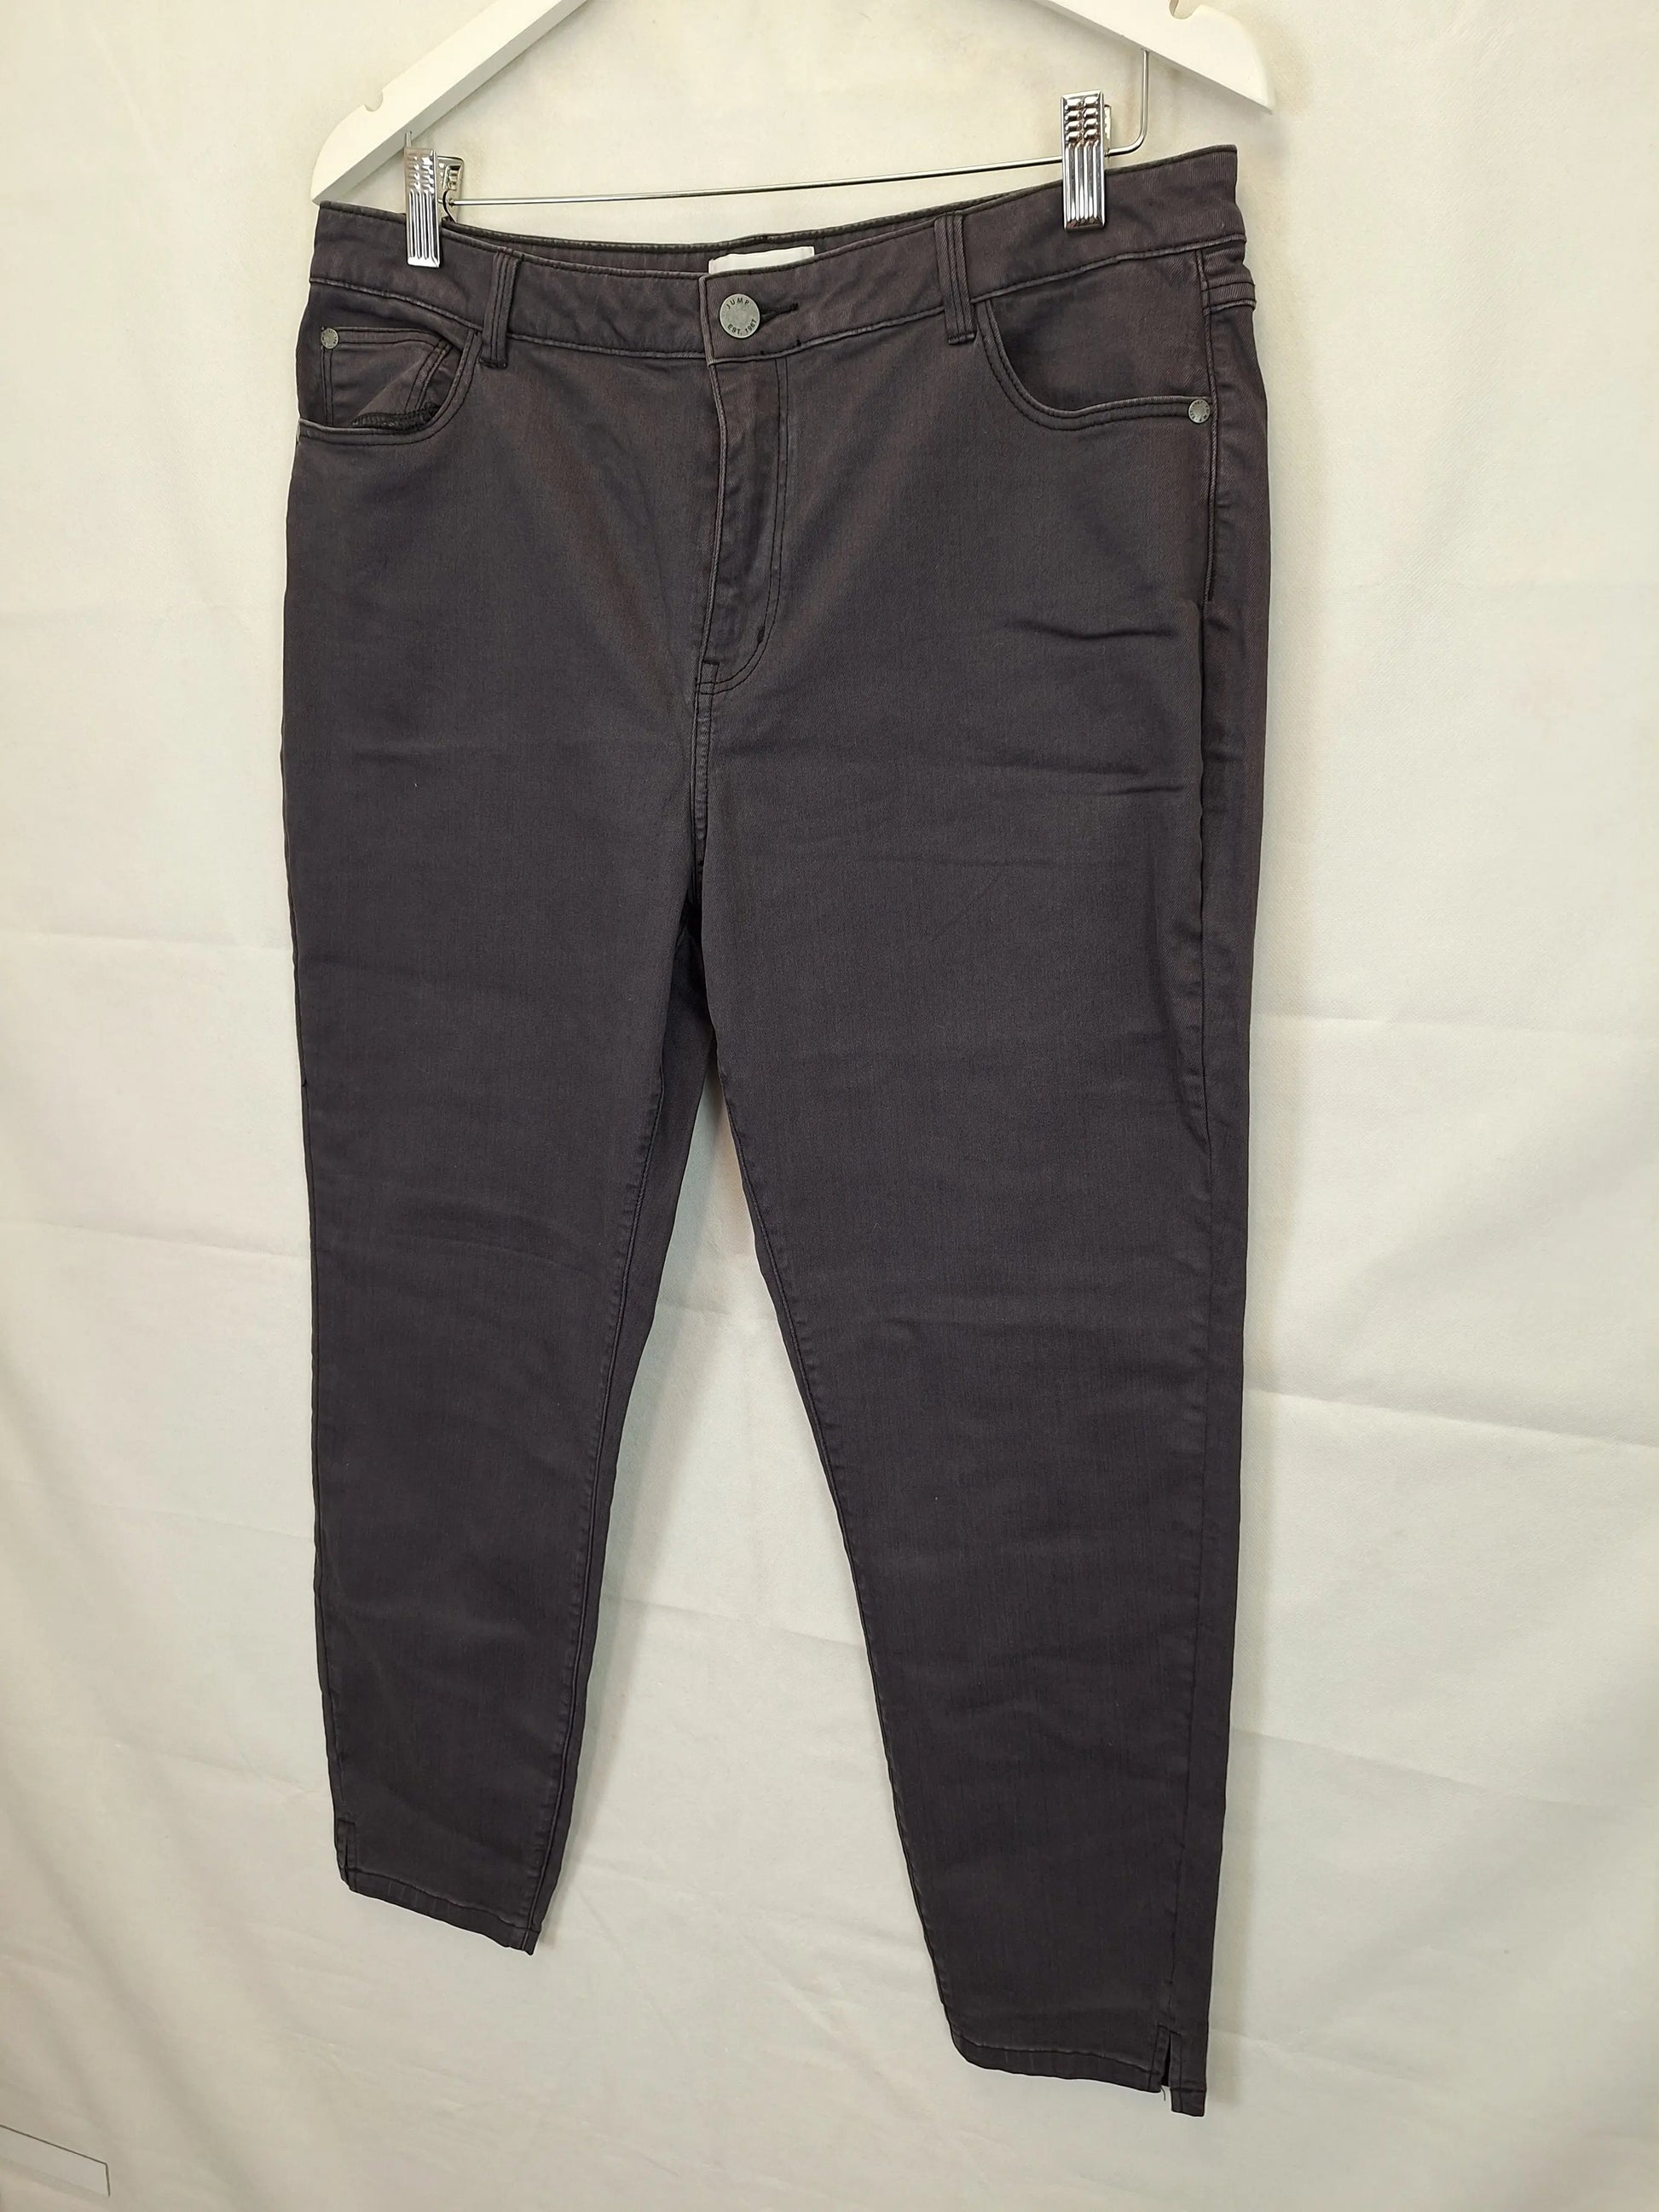 Jump Chalk Denim Jeans Size 16 by SwapUp-Online Second Hand Store-Online Thrift Store